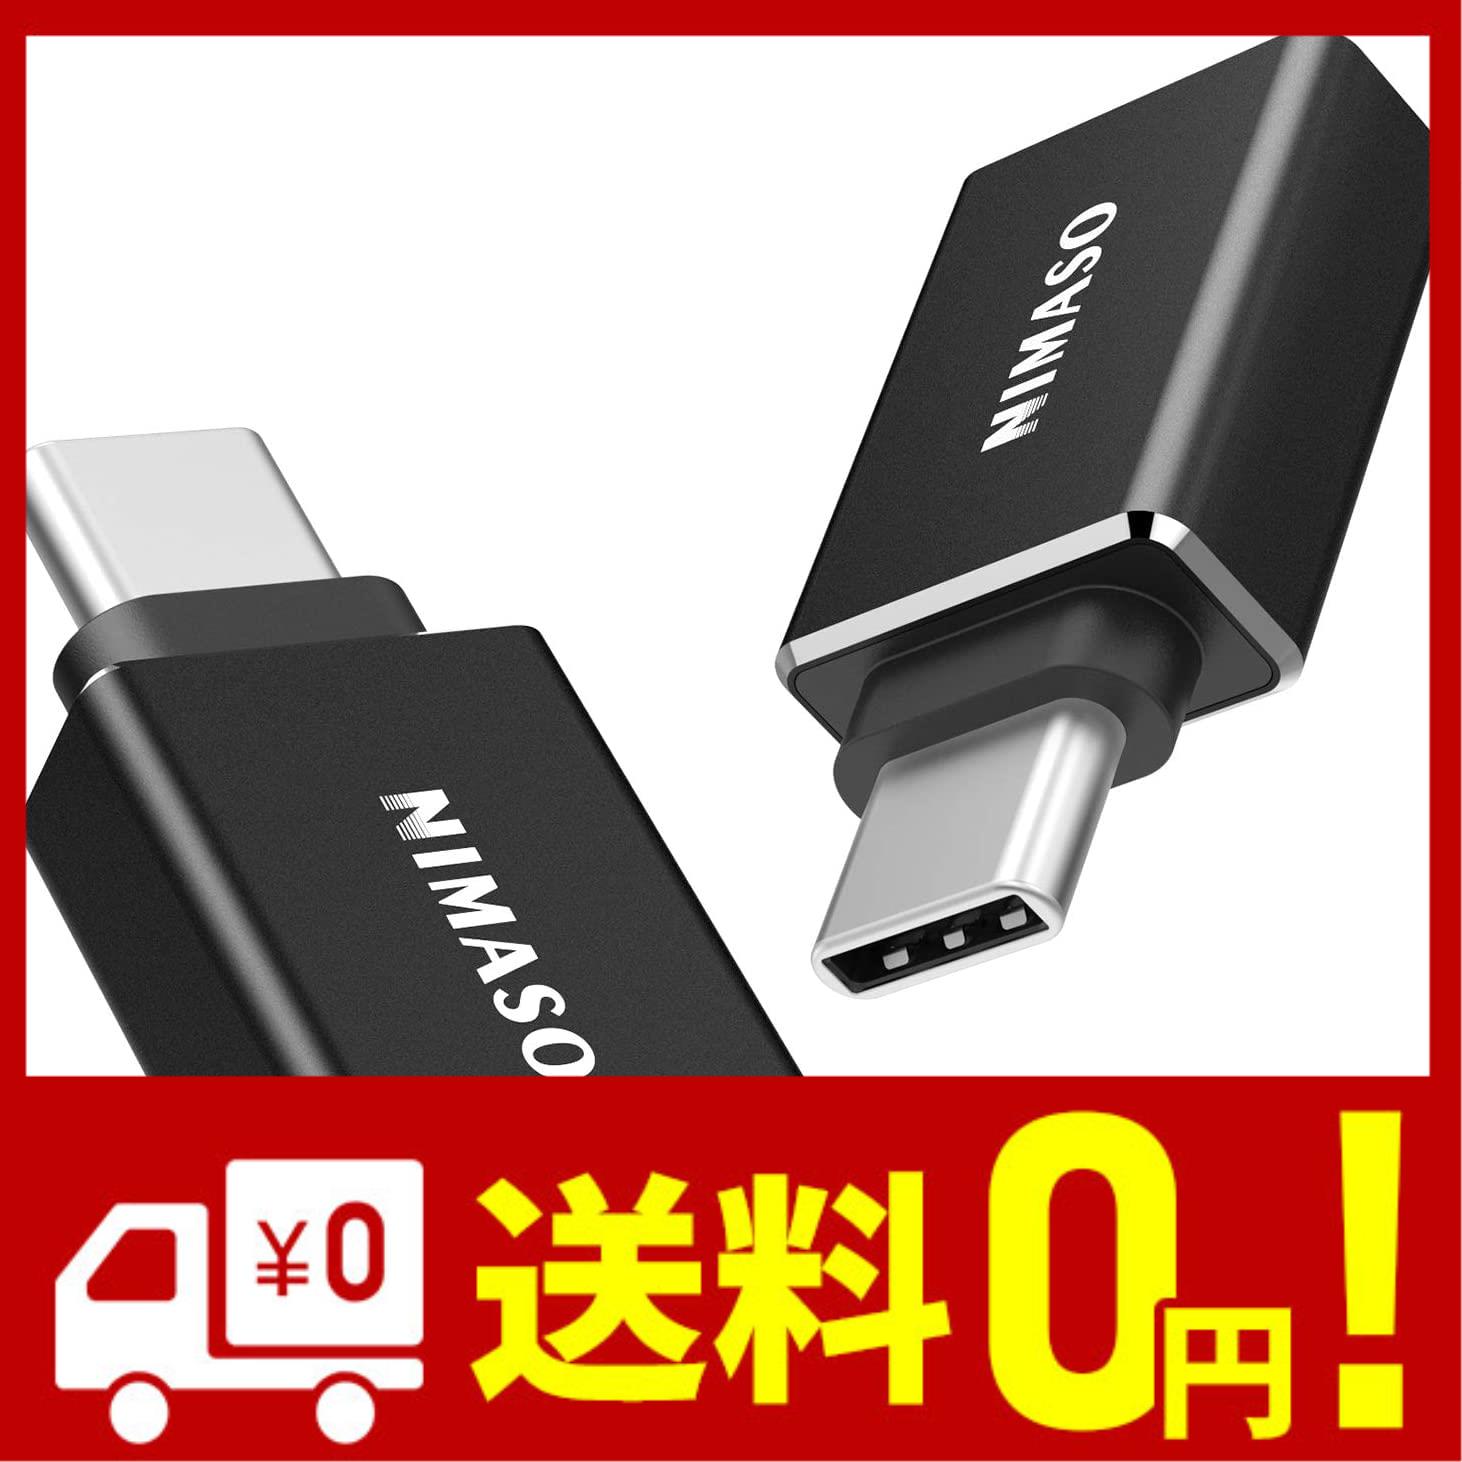 NIMASO USB-C USB 3.0 変換アダプタ 2個セット Type C - USB A 3.0 メス 最大5Gbps MacBook Pro MacBook Air iPad Pro その他 端末用